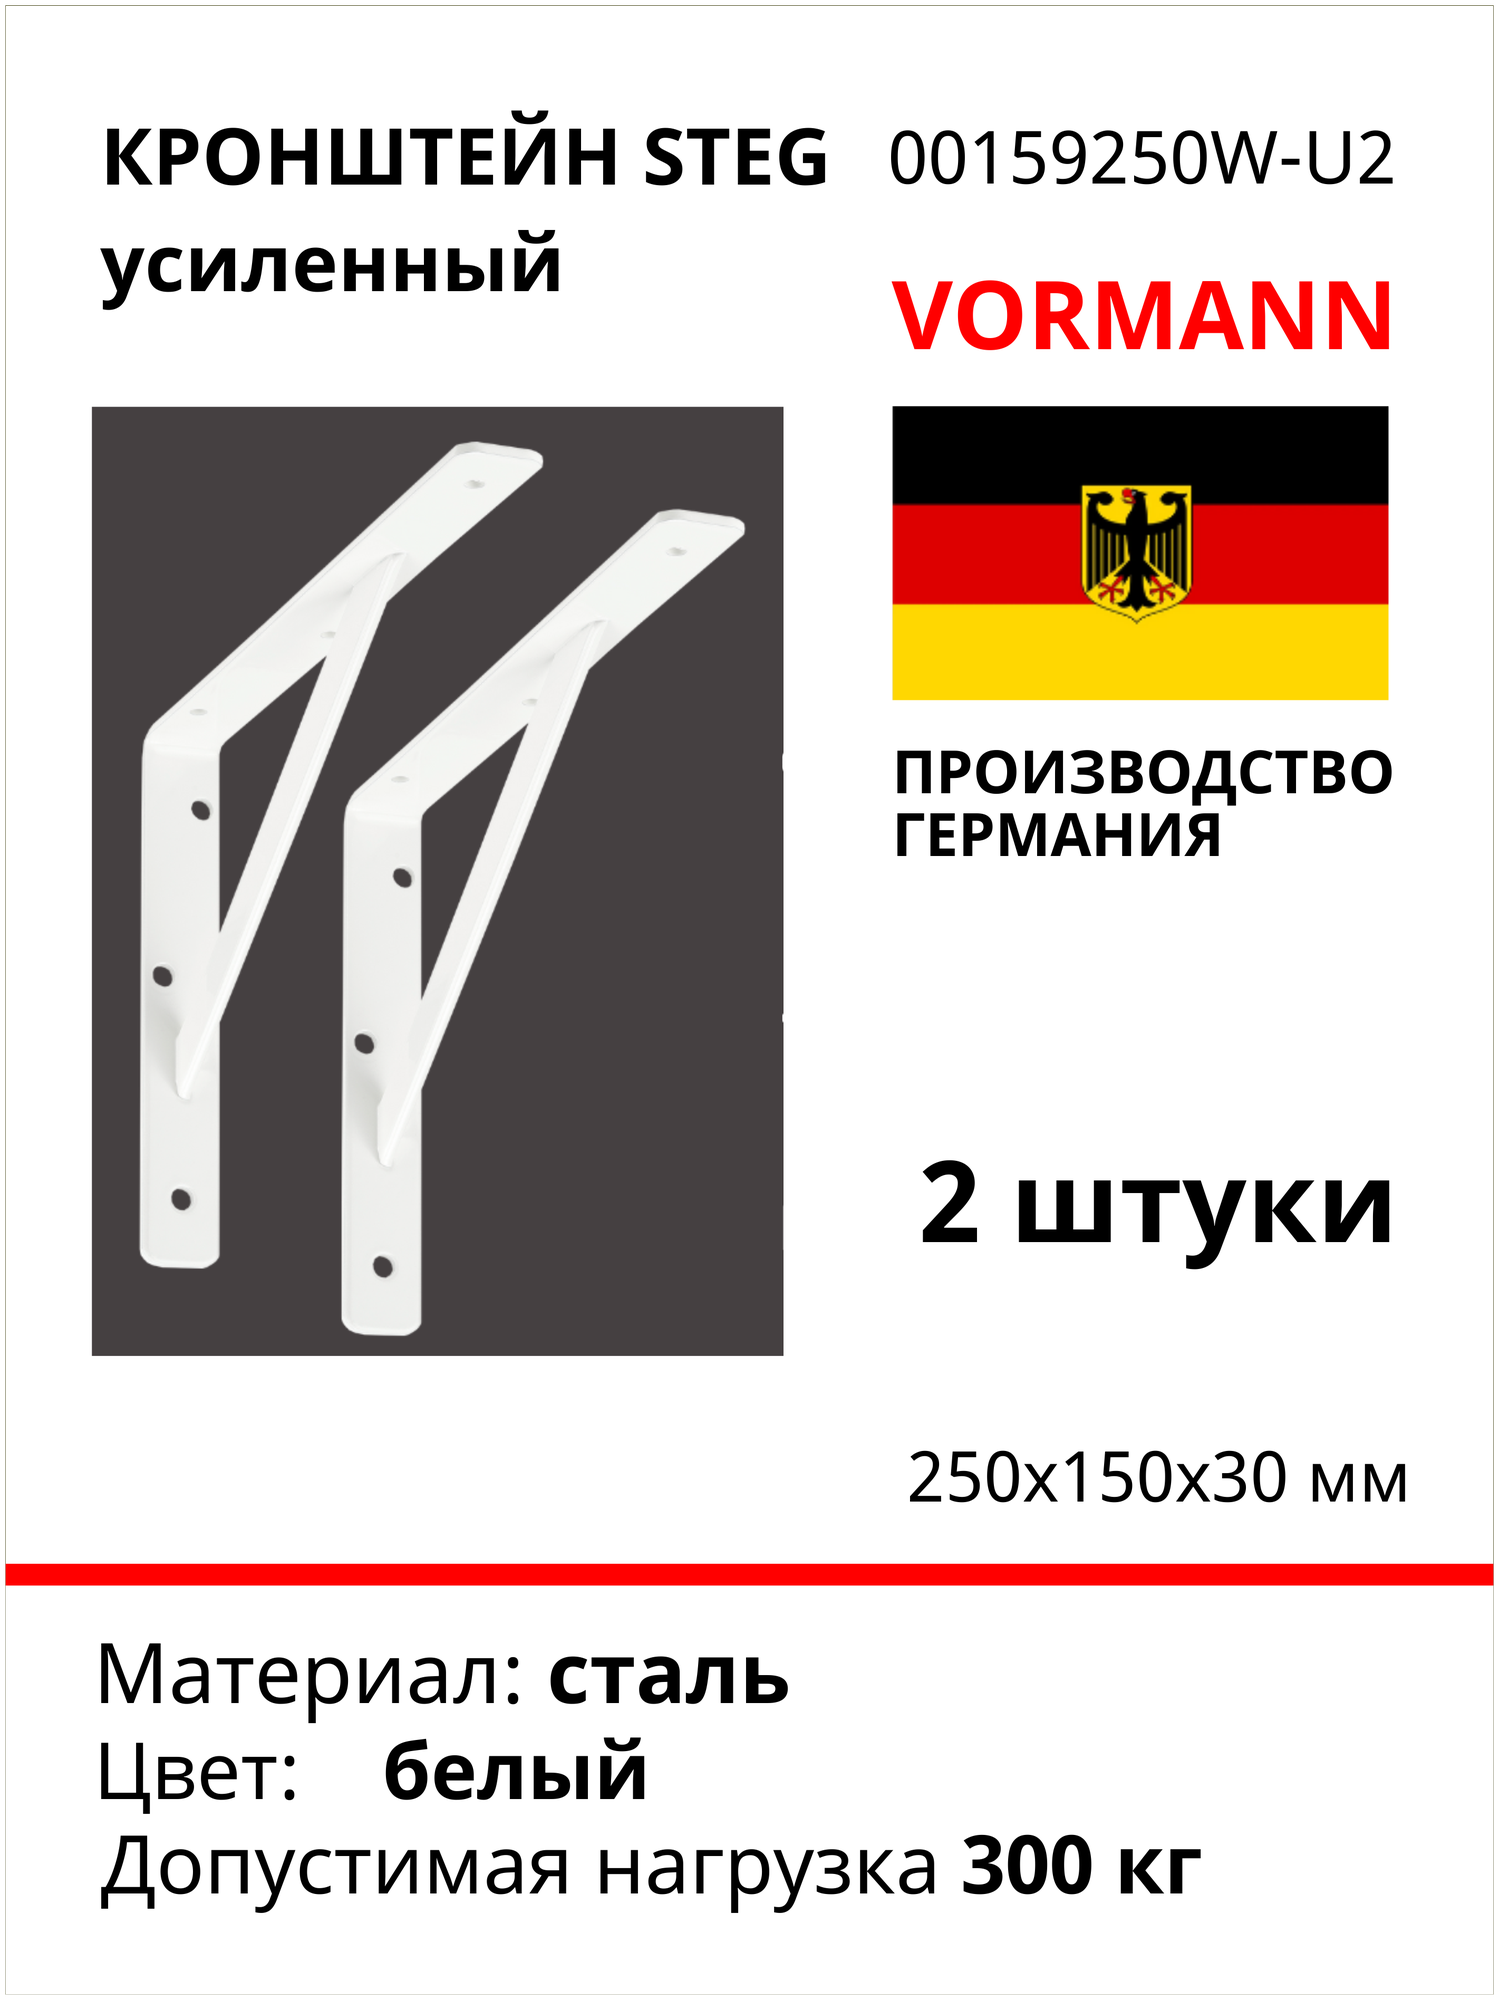 Кронштейн VORMANN Steg усиленный 250х150х30х4 мм, оцинкованный, цвет: белый, 300 кг 00159 250 W_U2, комплект 2шт